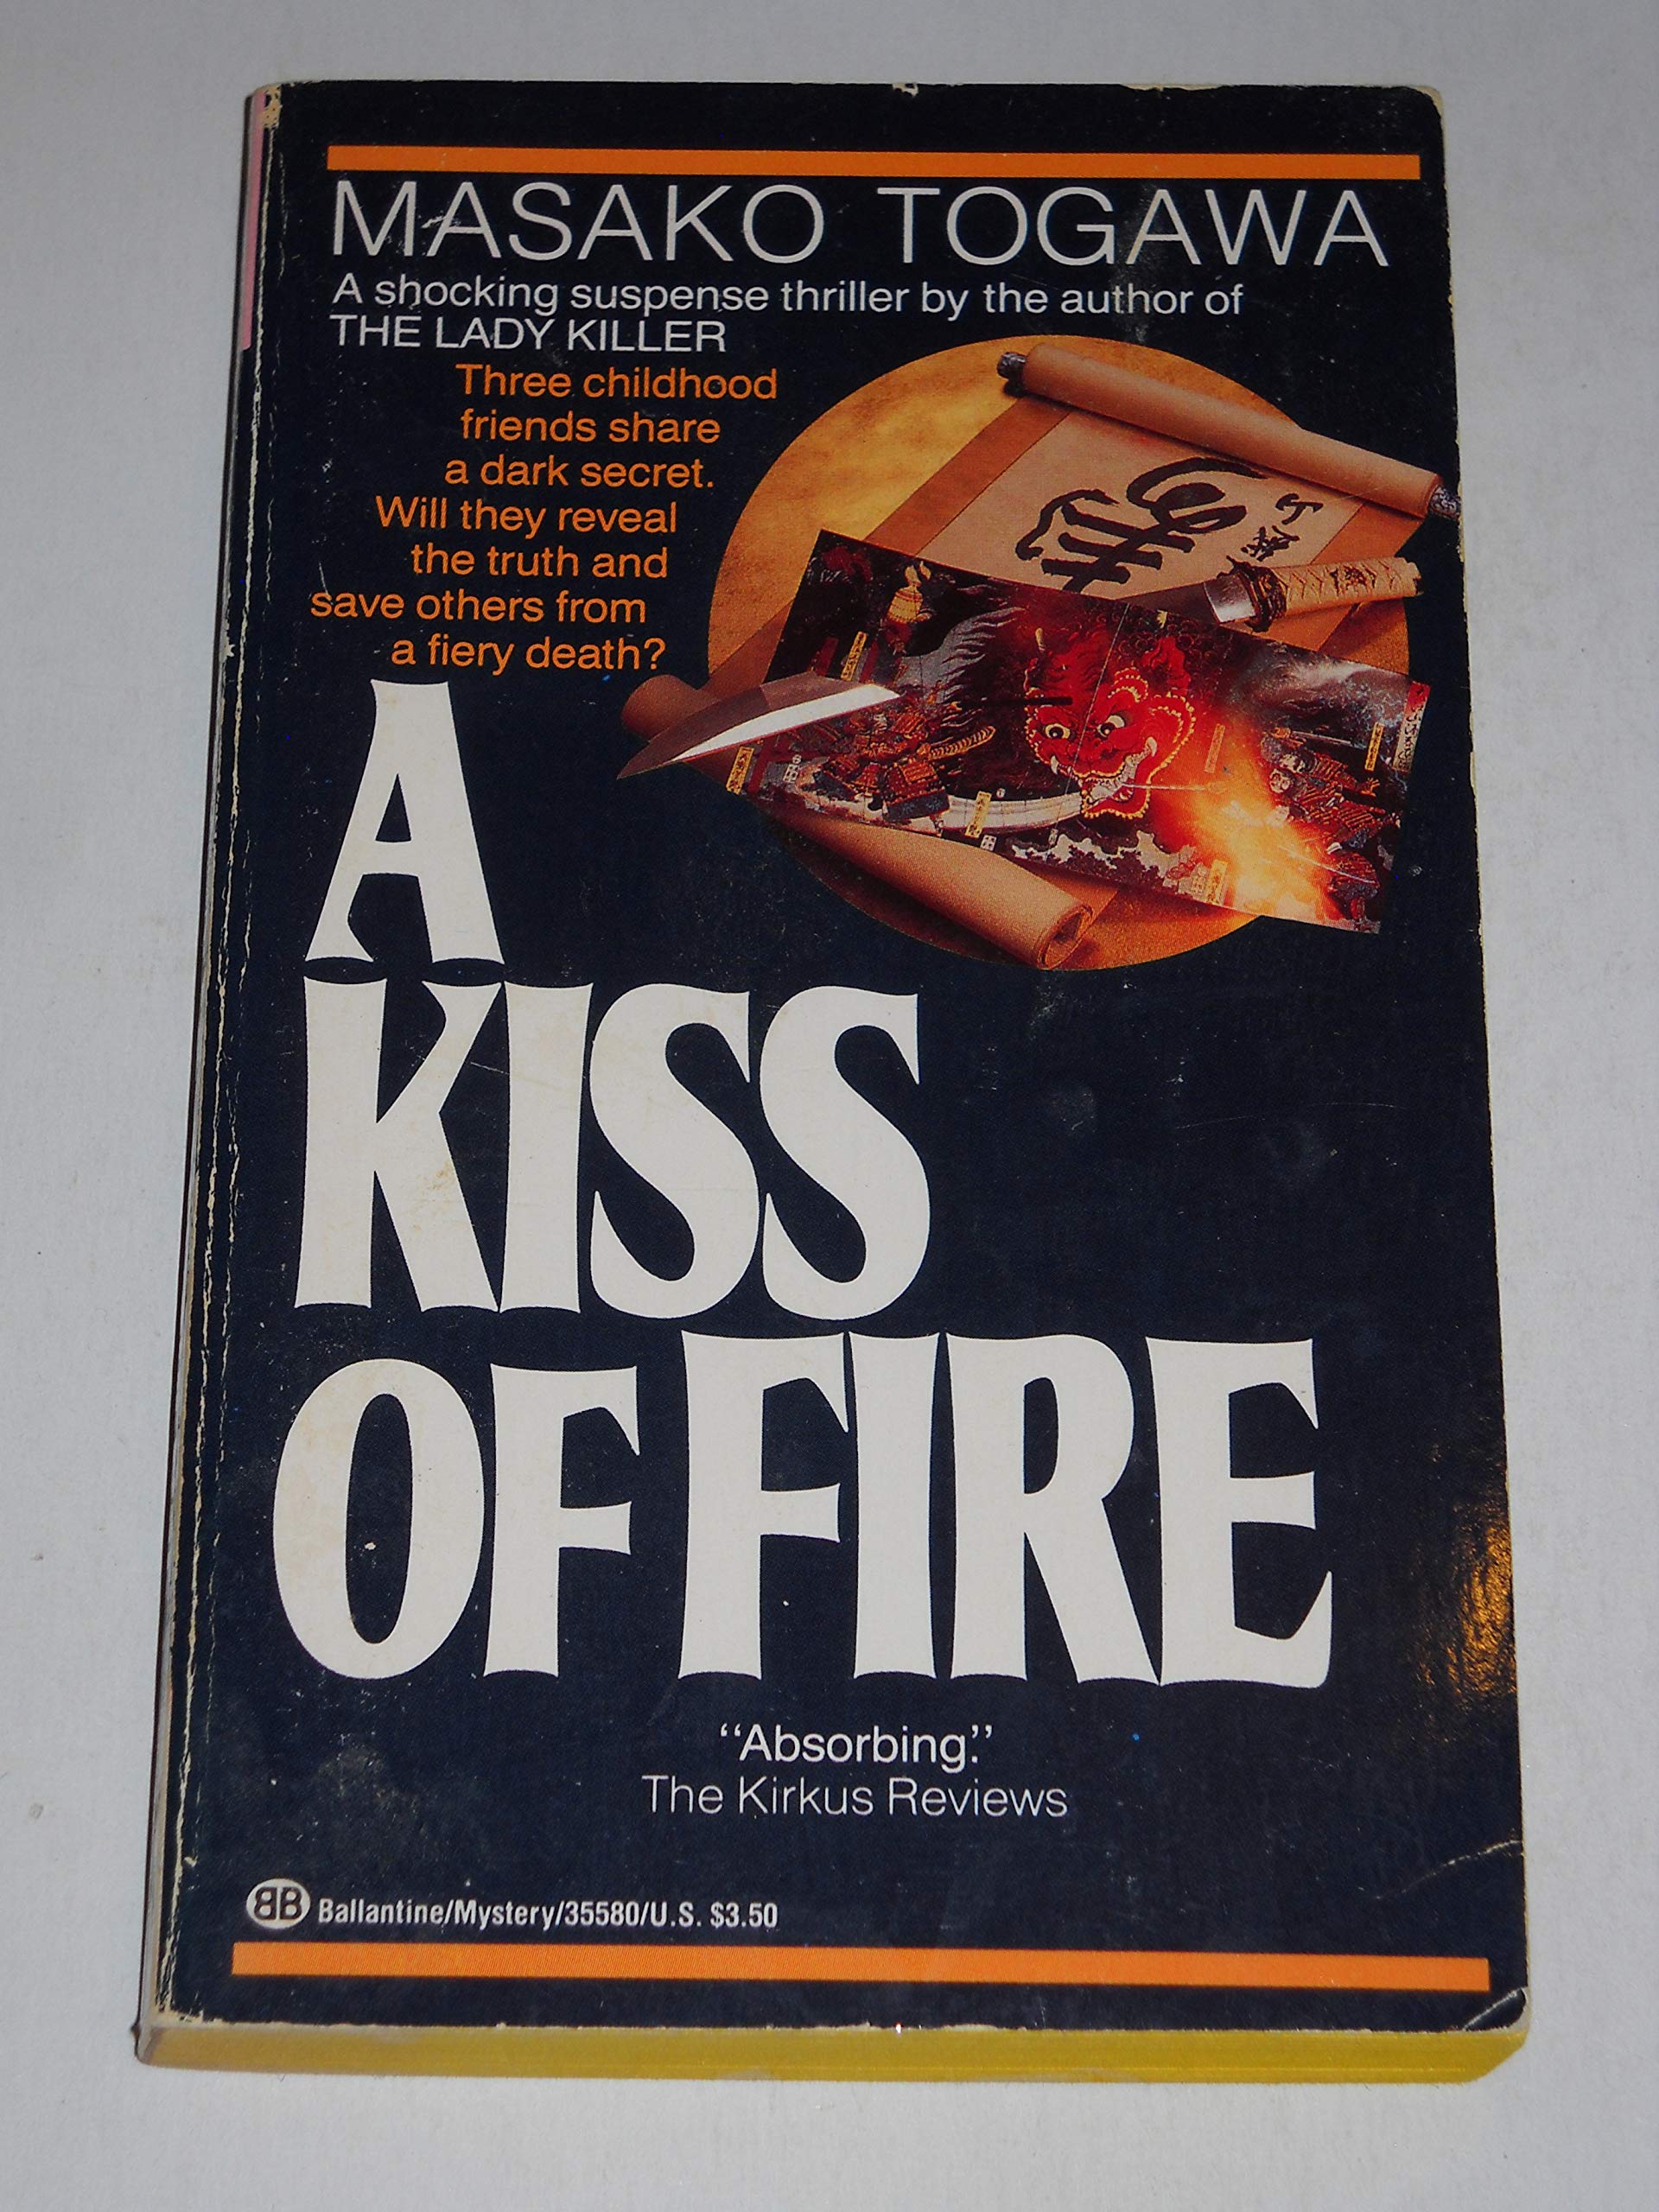 A Kiss of Fire